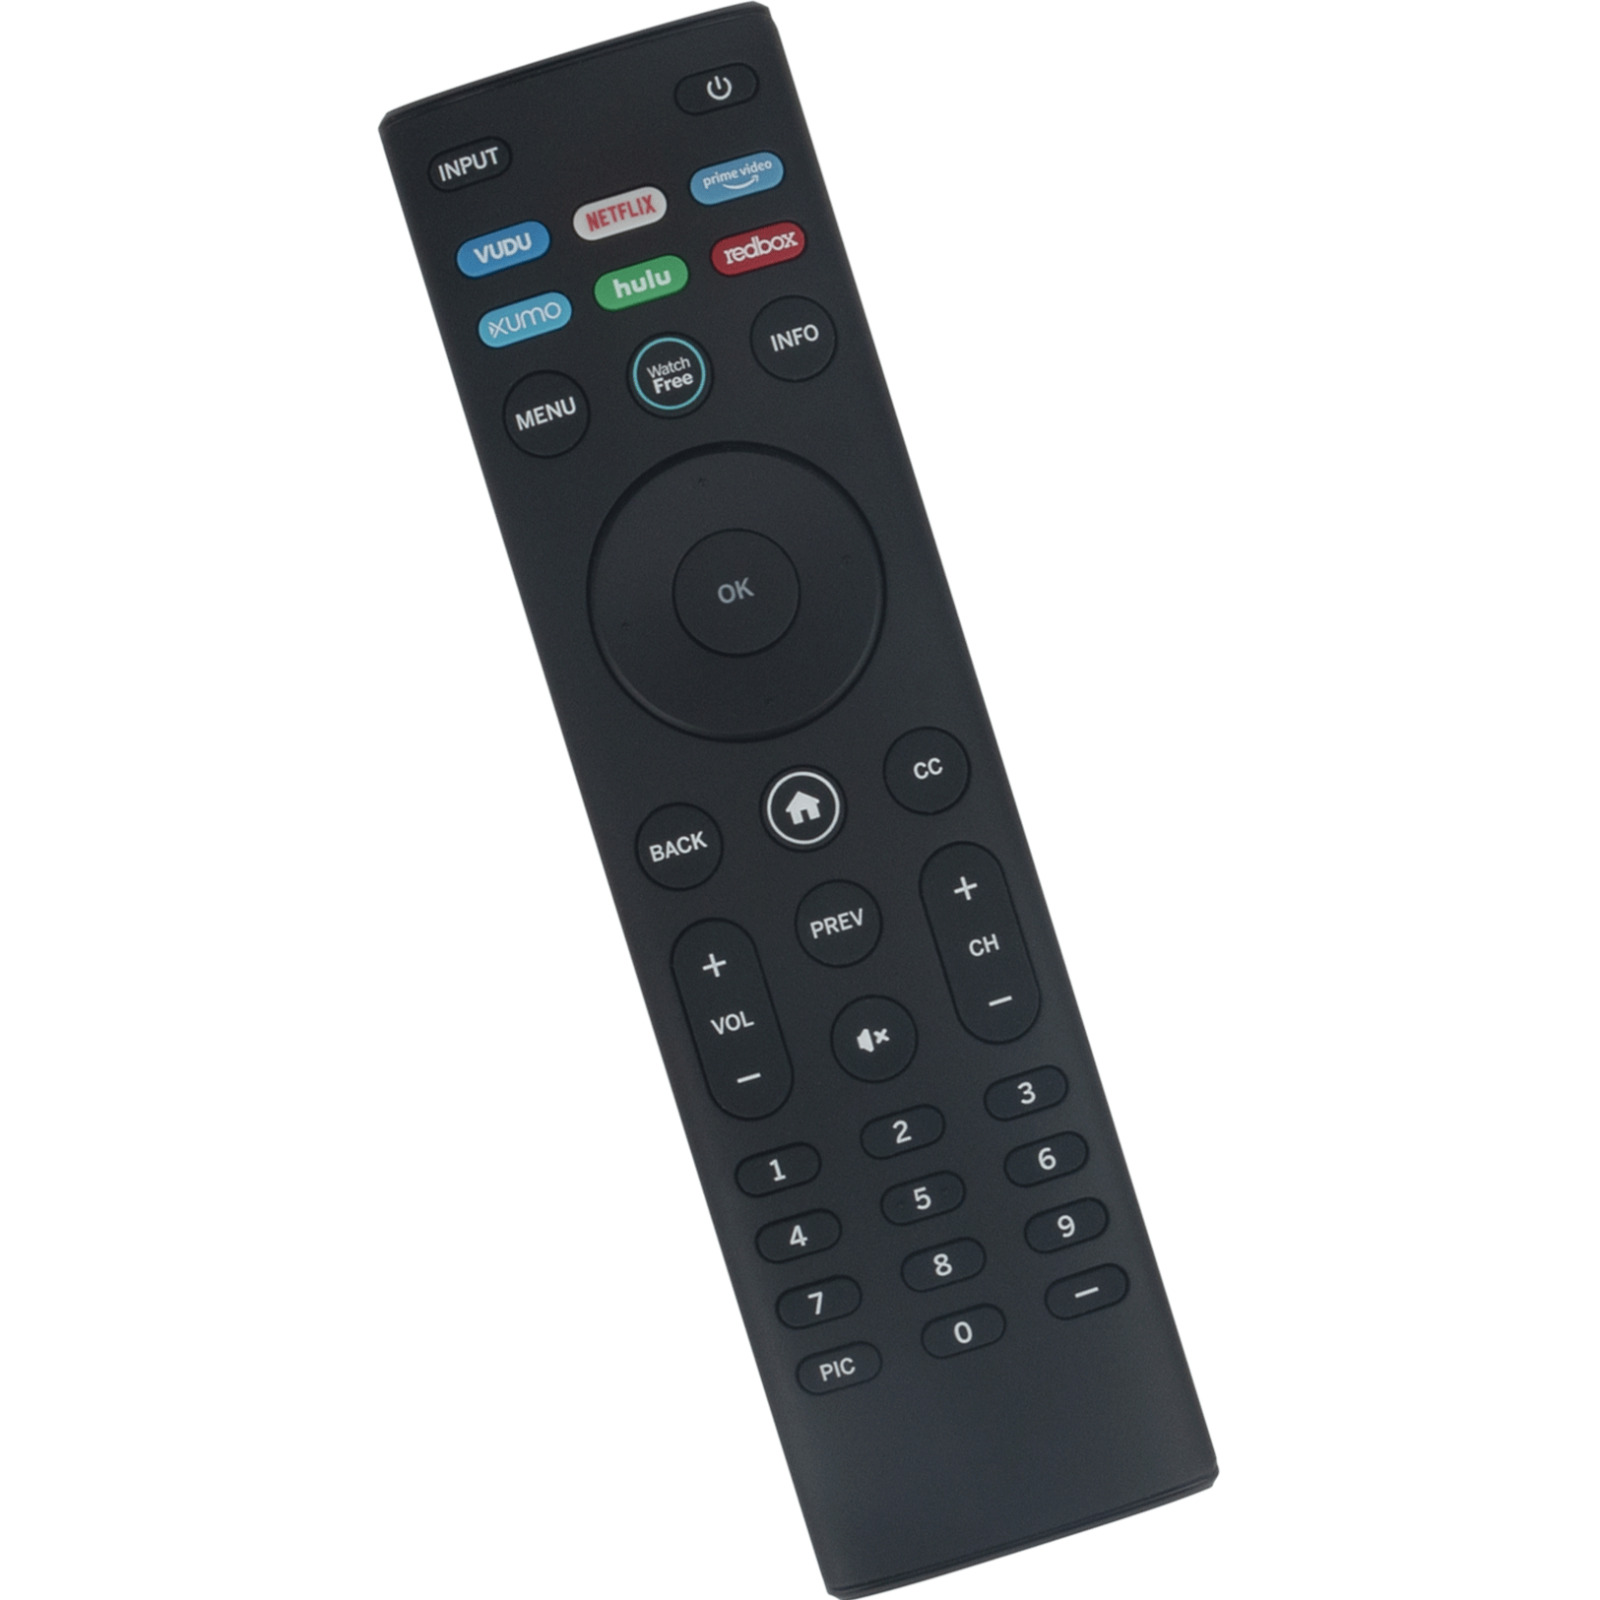  XRT140V3L42129 New Remote Control for Vizio Smart TV XRT140V-3L42129